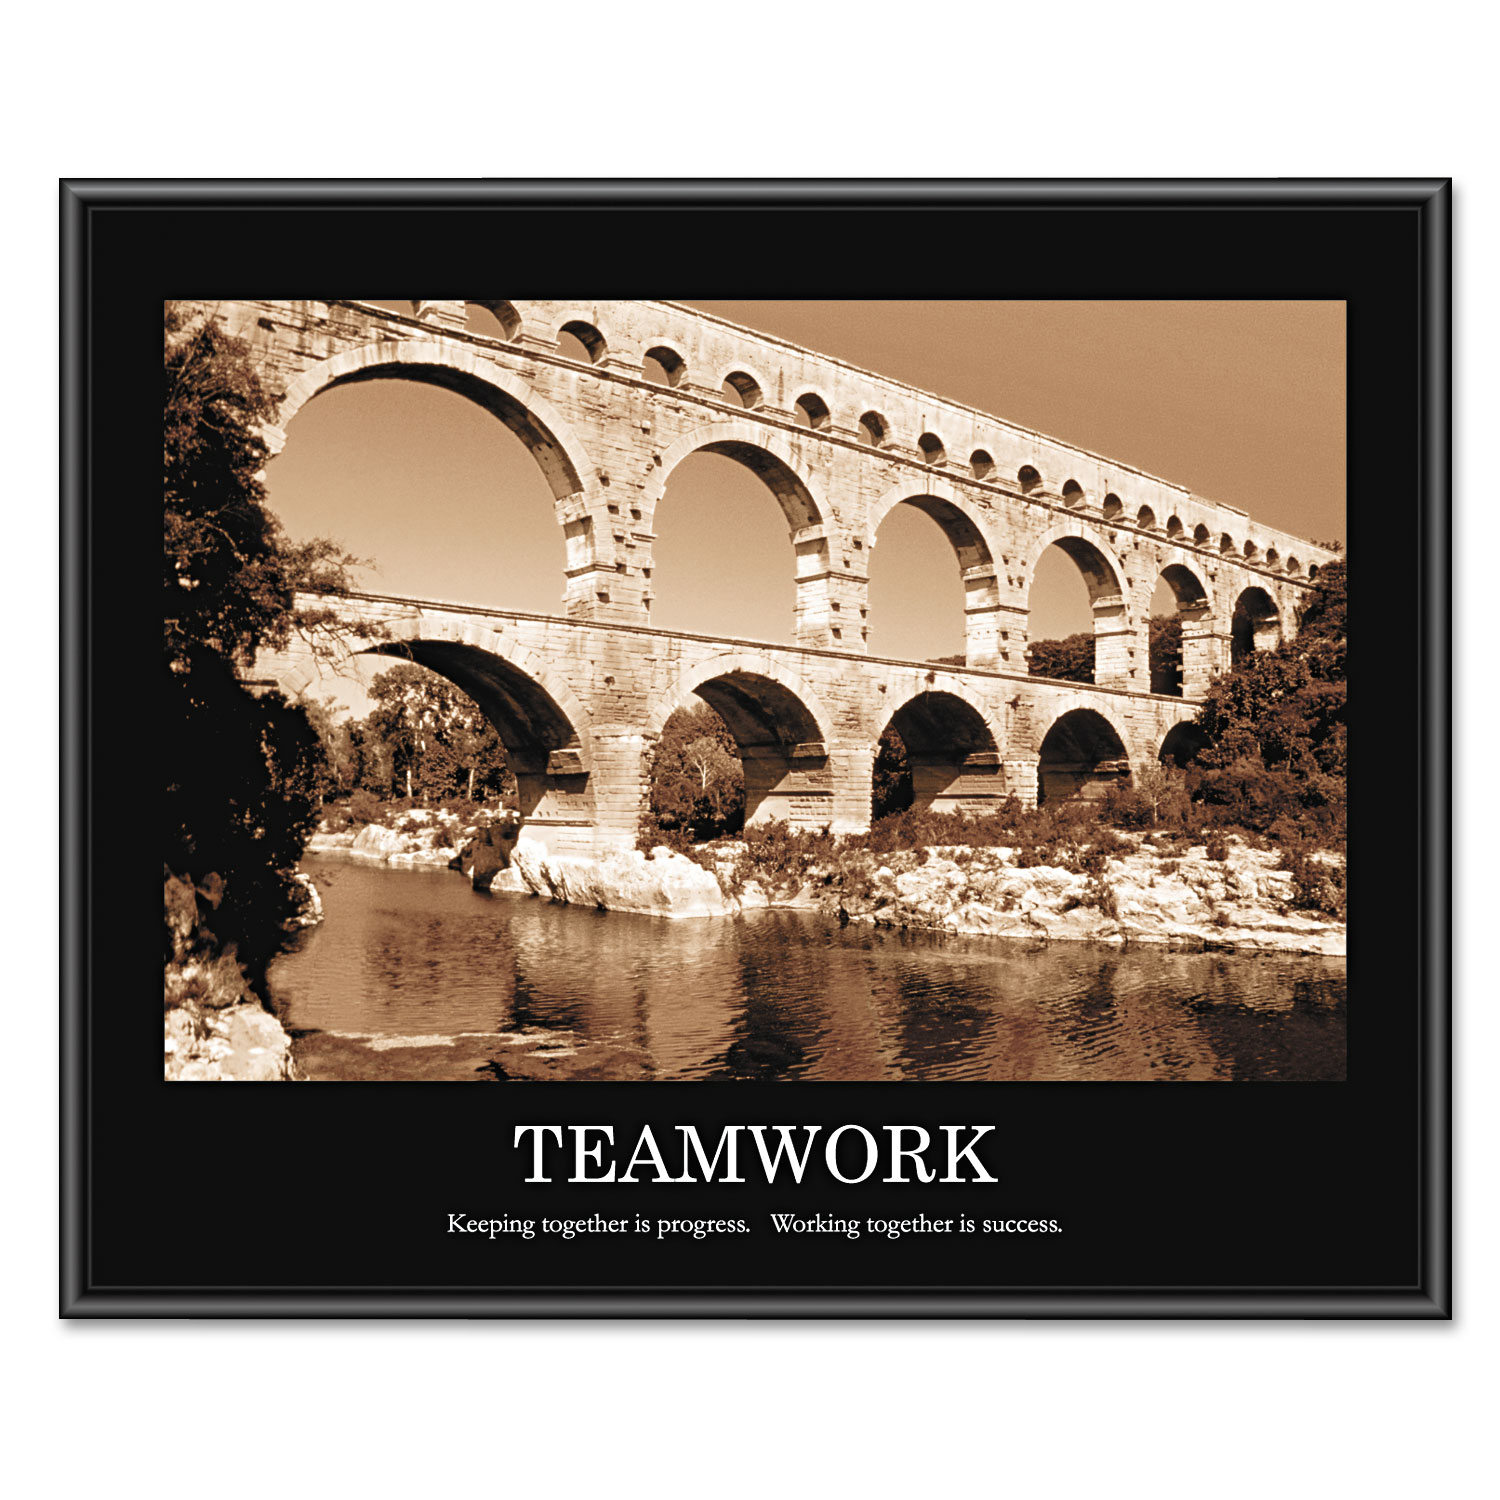 Teamwork Framed Sepia-Tone Motivational Print, 30 x 24